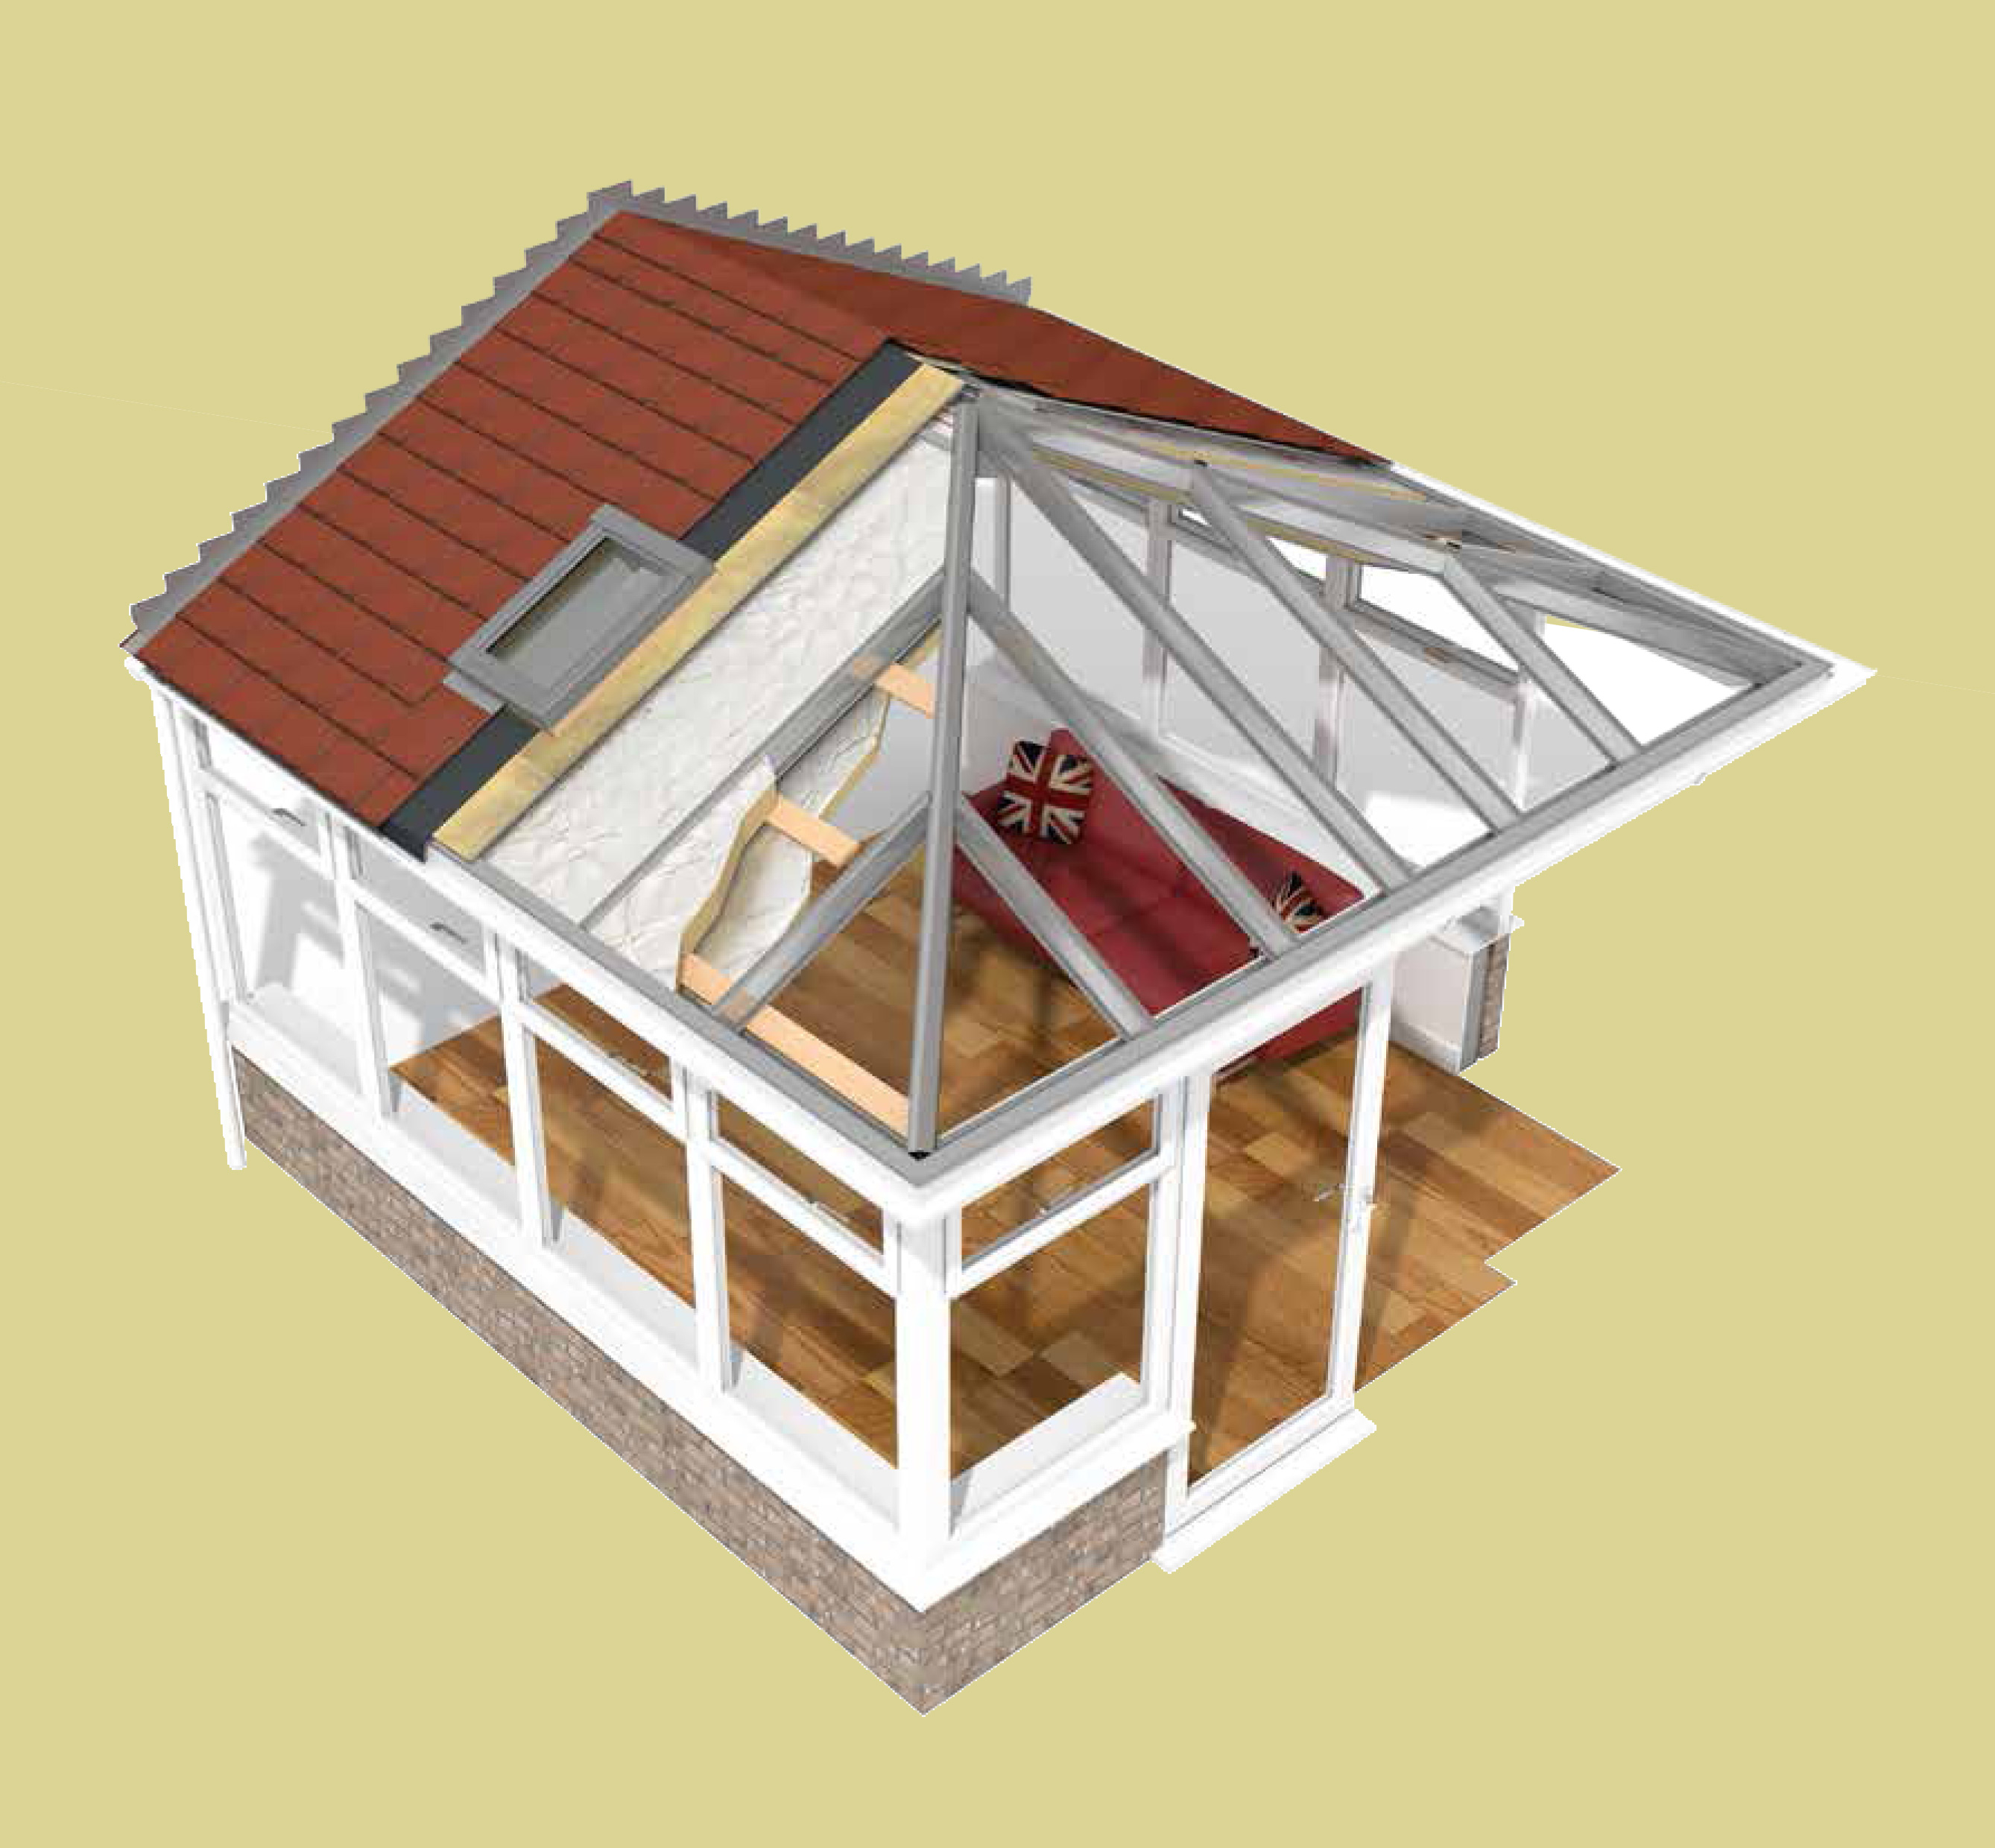 Tiled Roof System